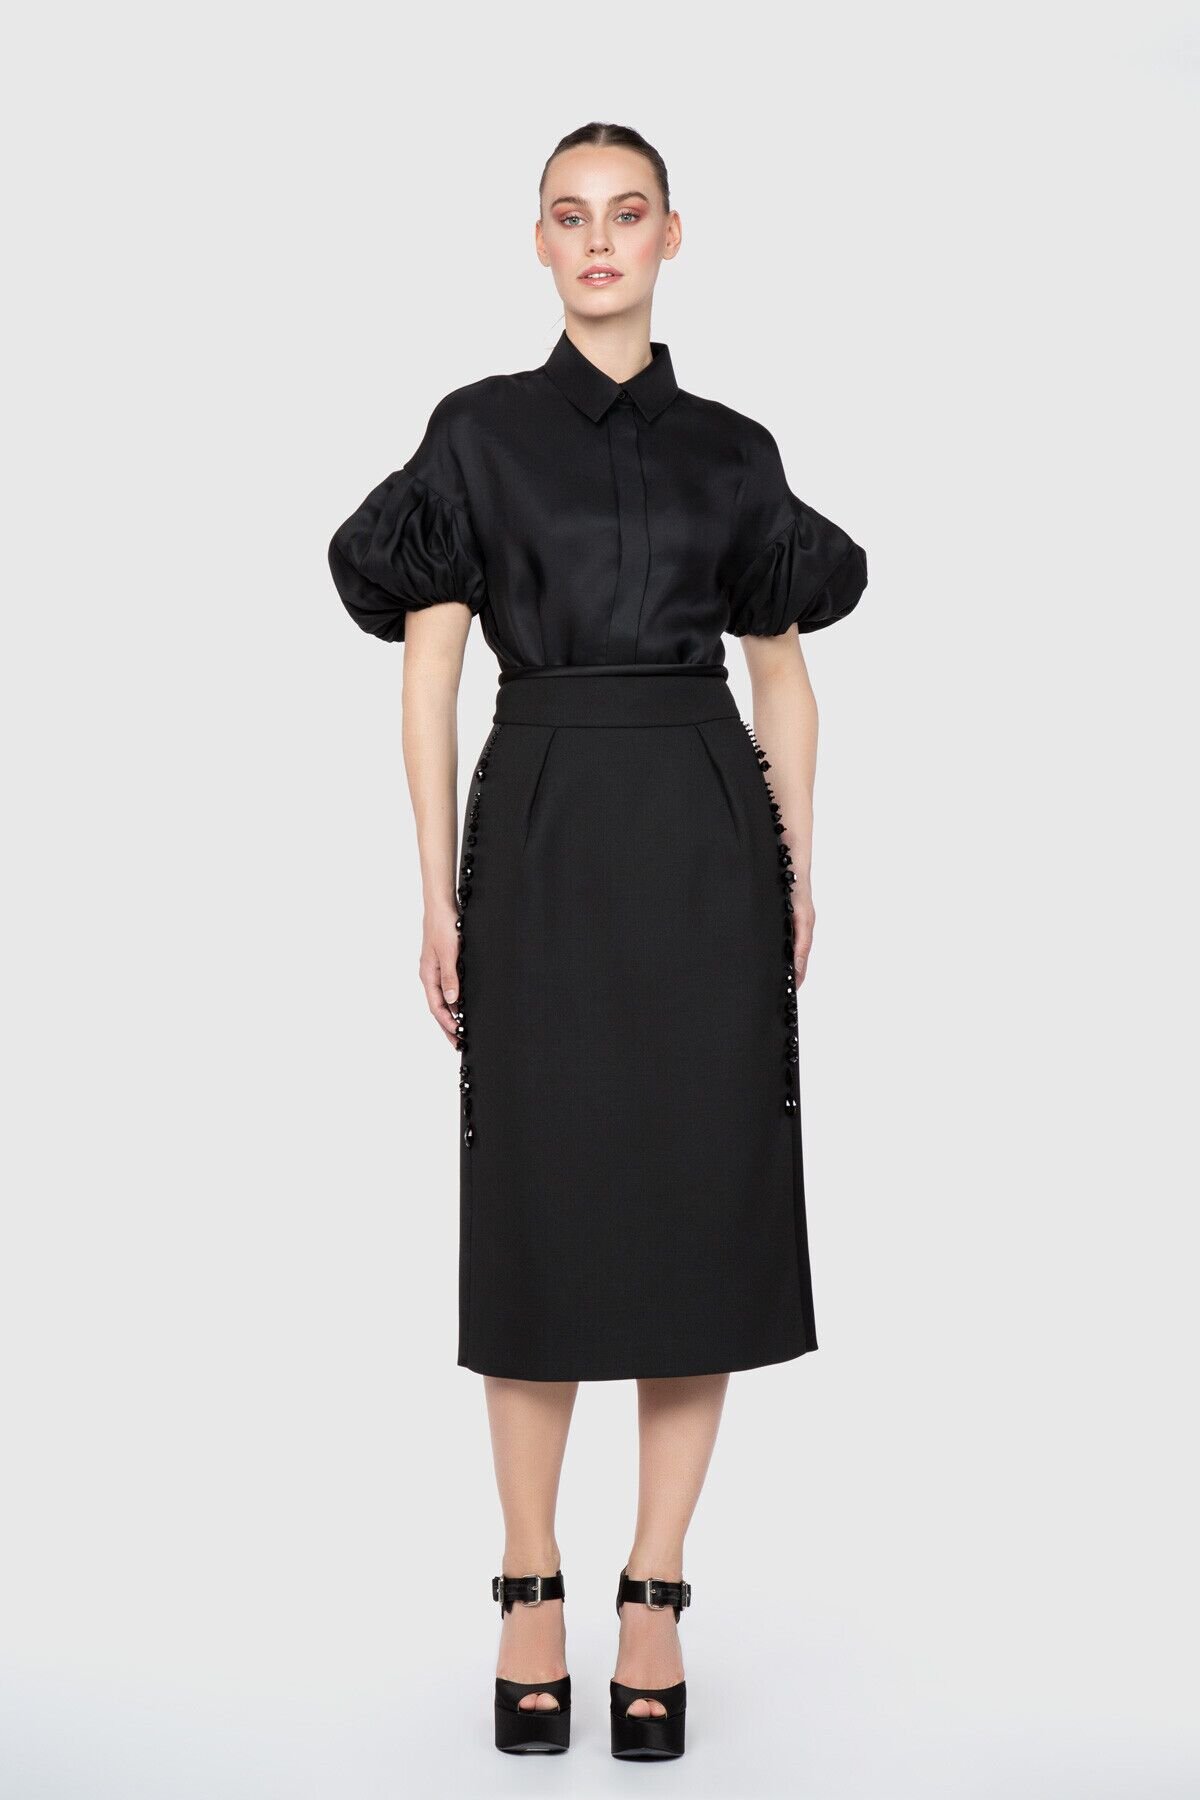 Embroidered Detailed High Waist Black Skirt